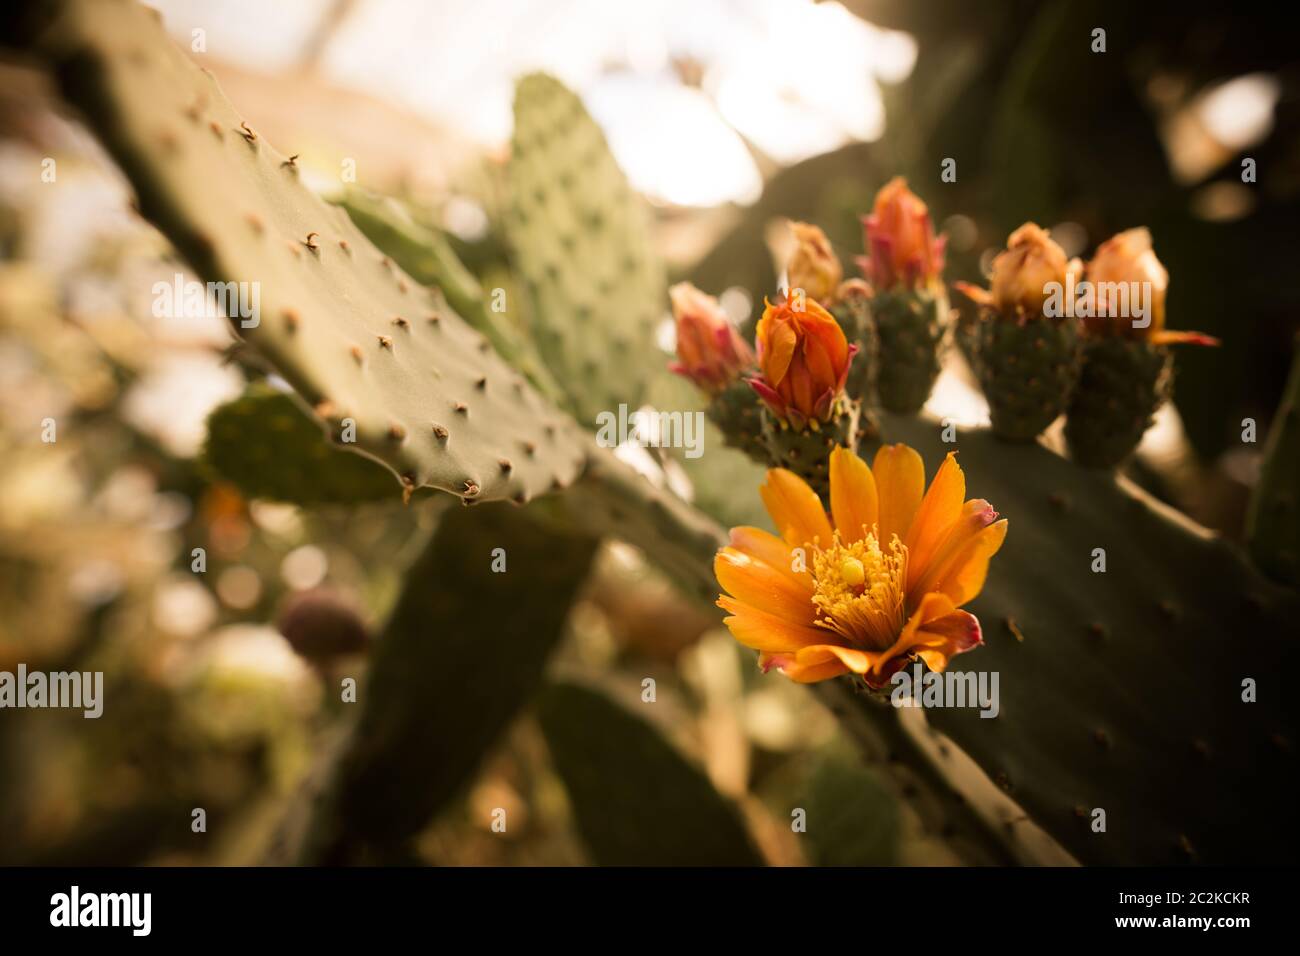 Opuntia cactus with blooming orange flowers. Stock Photo